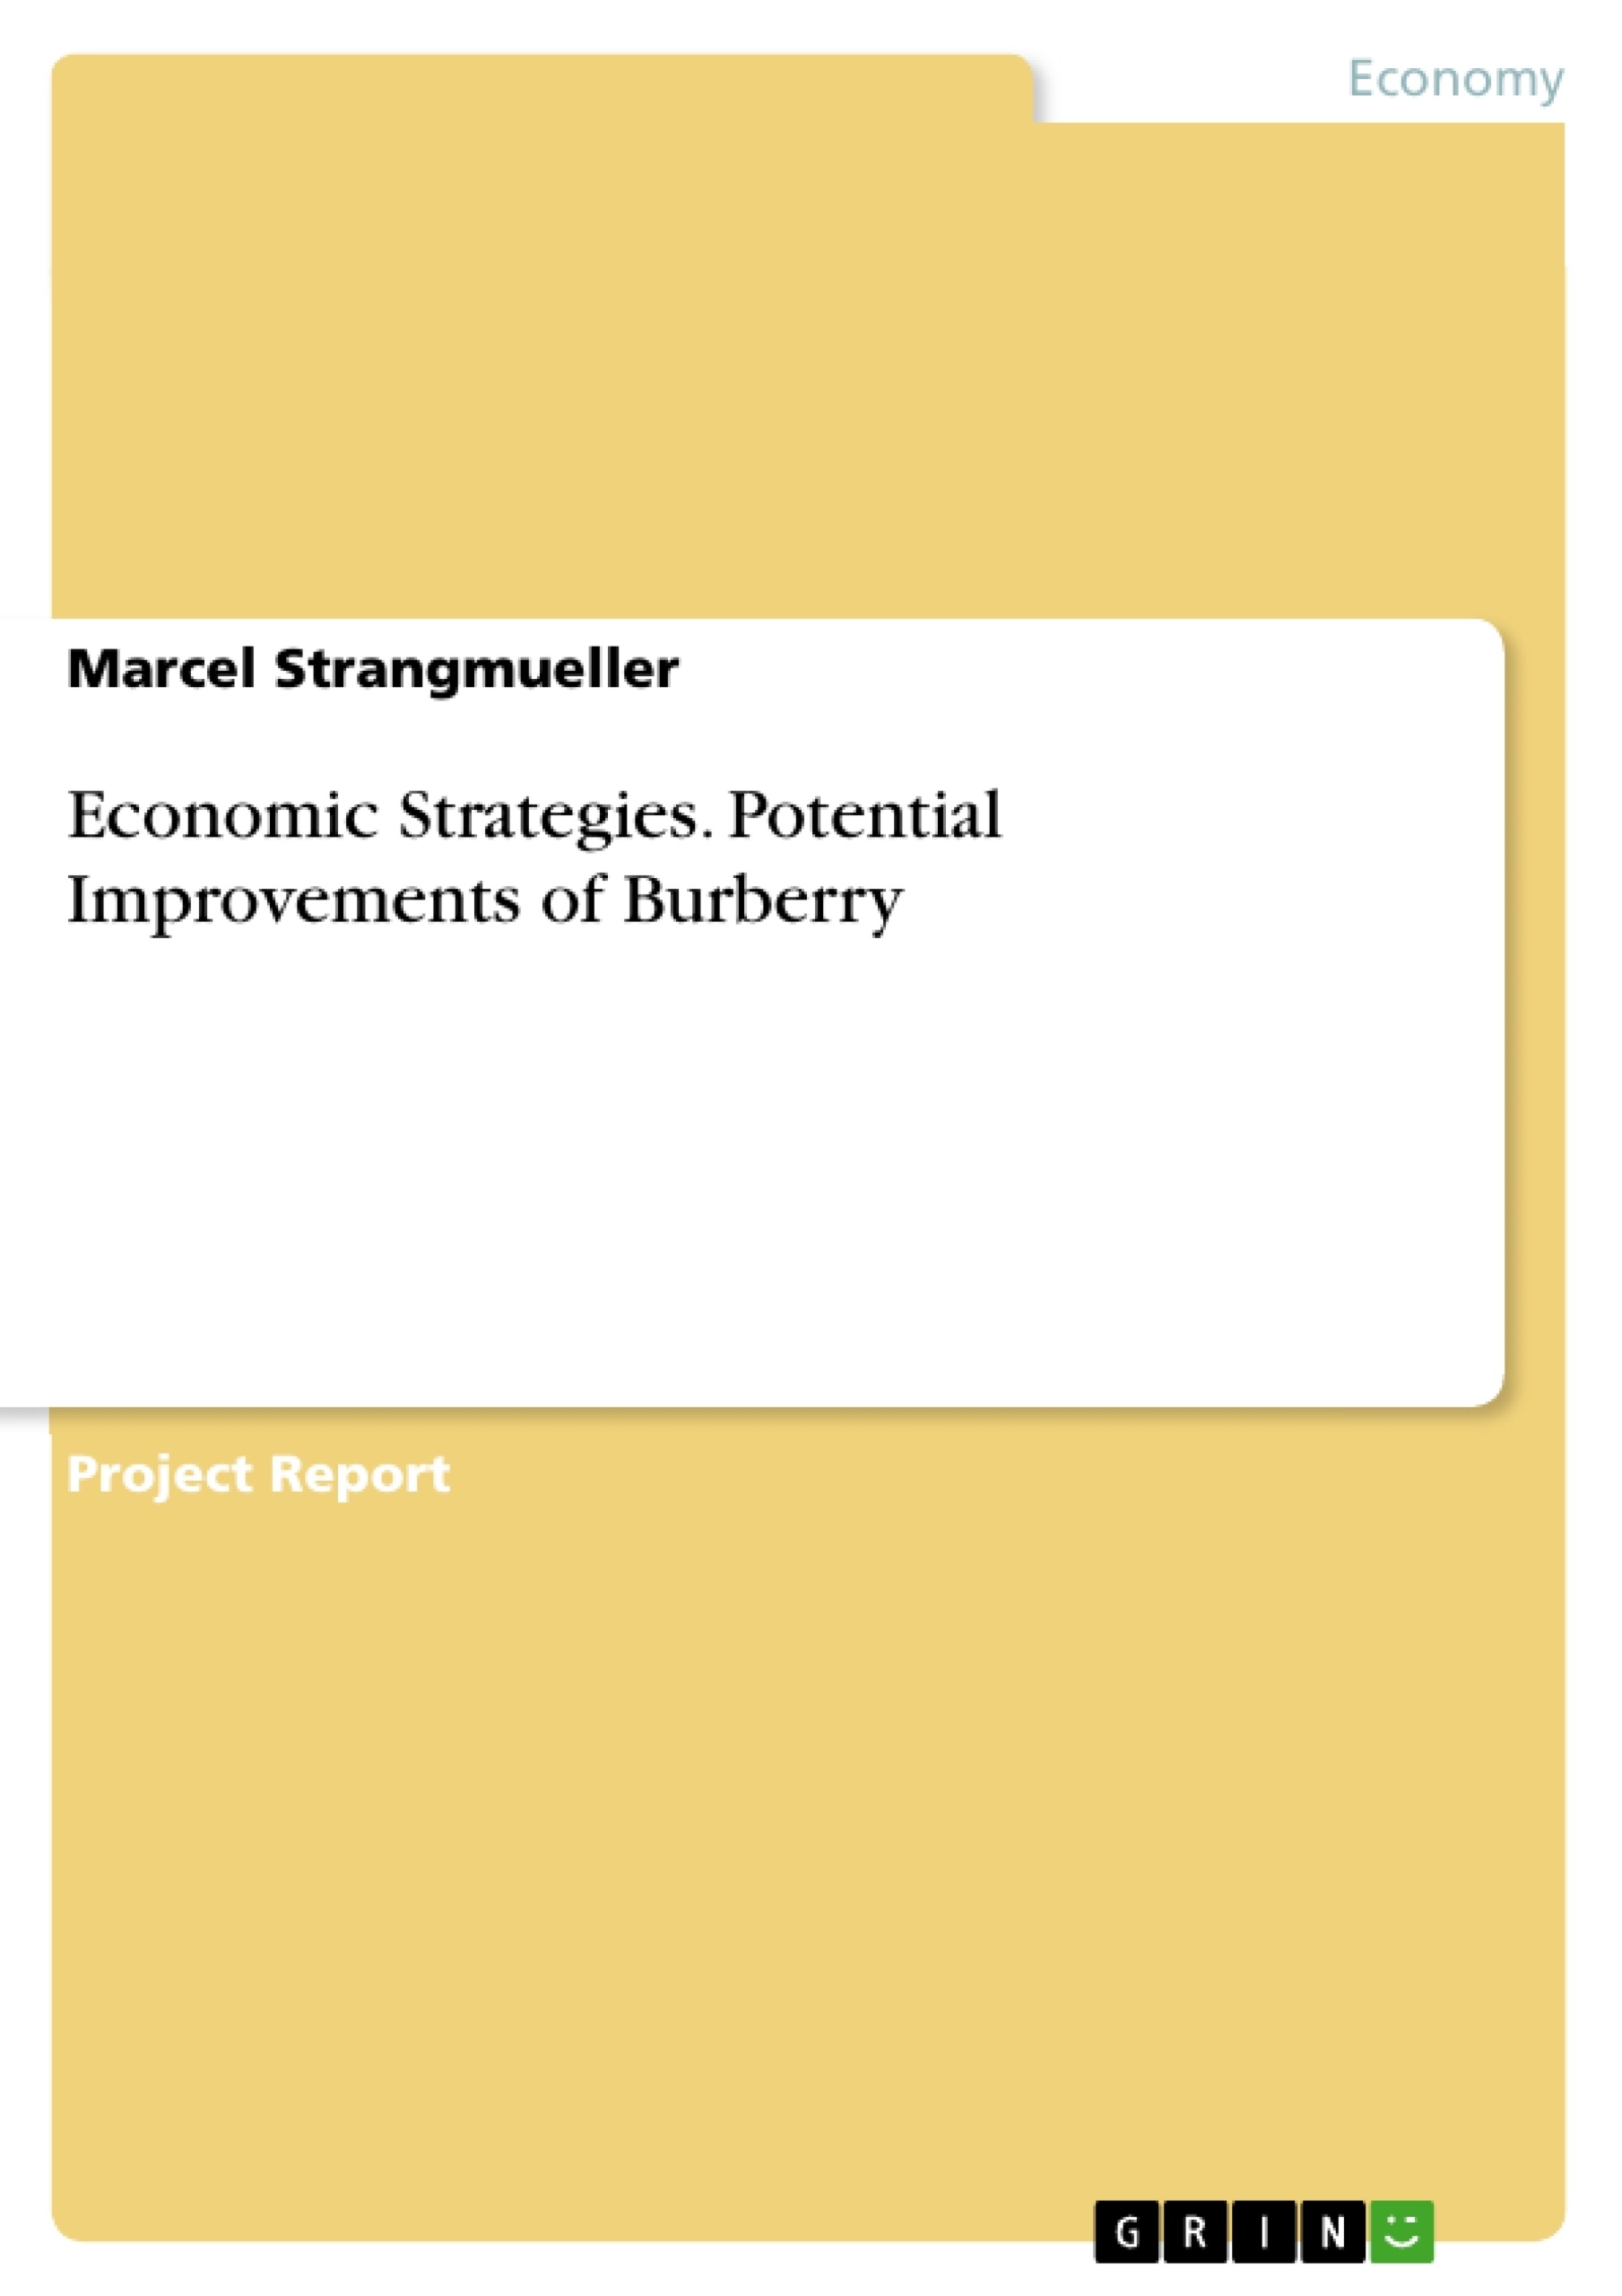 Economic Strategies. Potential Improvements of Burberry - GRIN